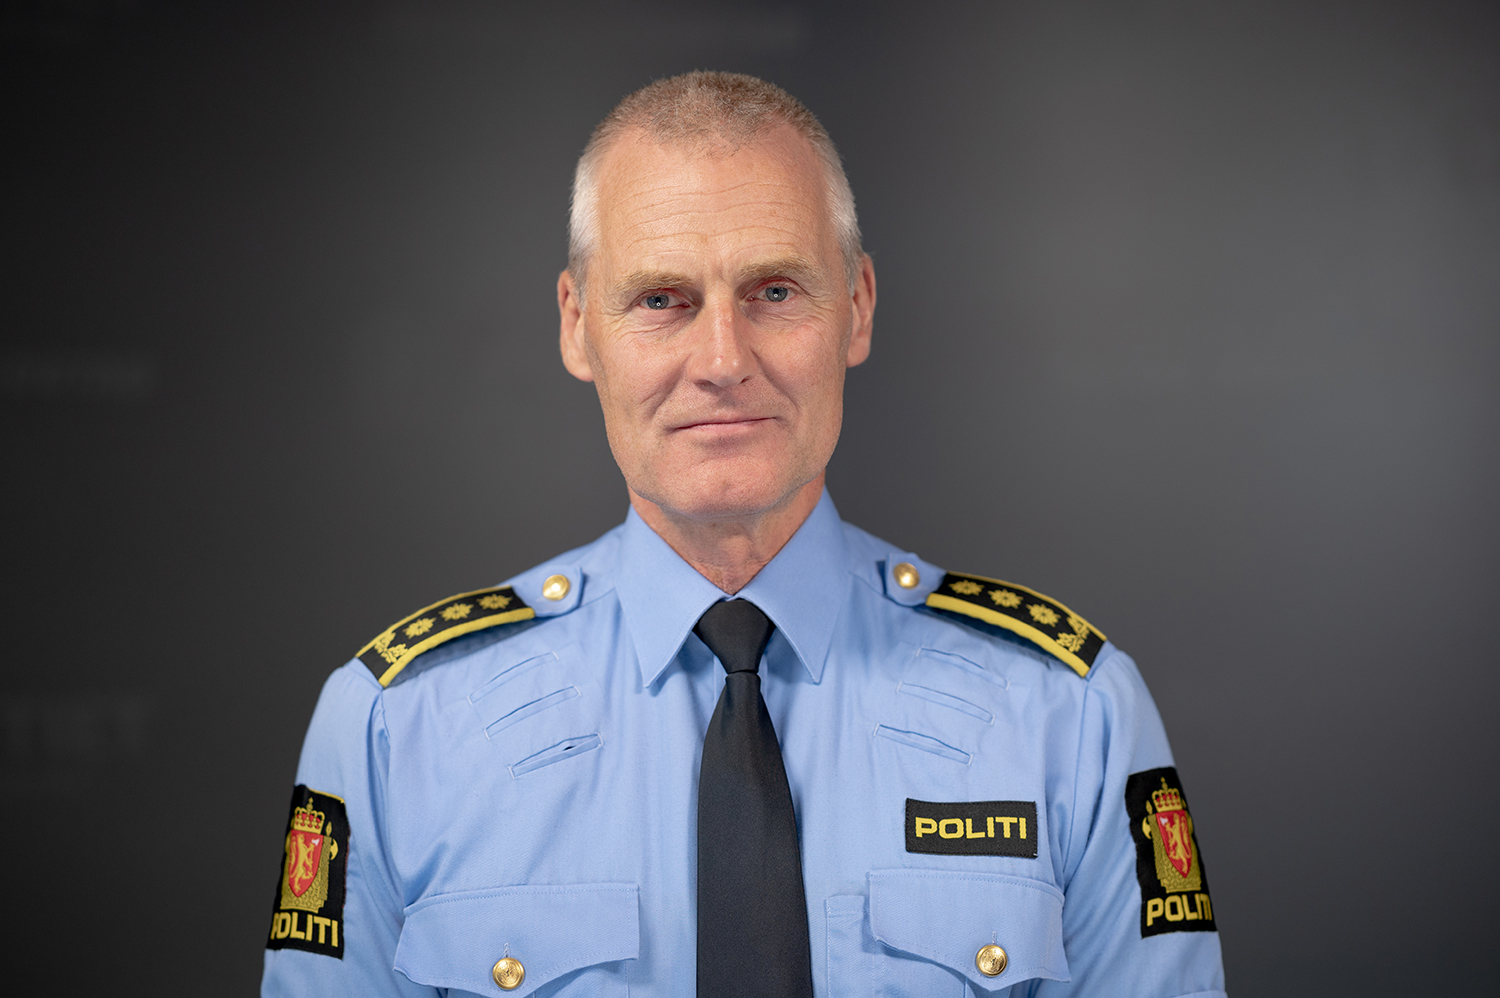 Stabssjef Harald Nilssen, Oslo politidistrikt